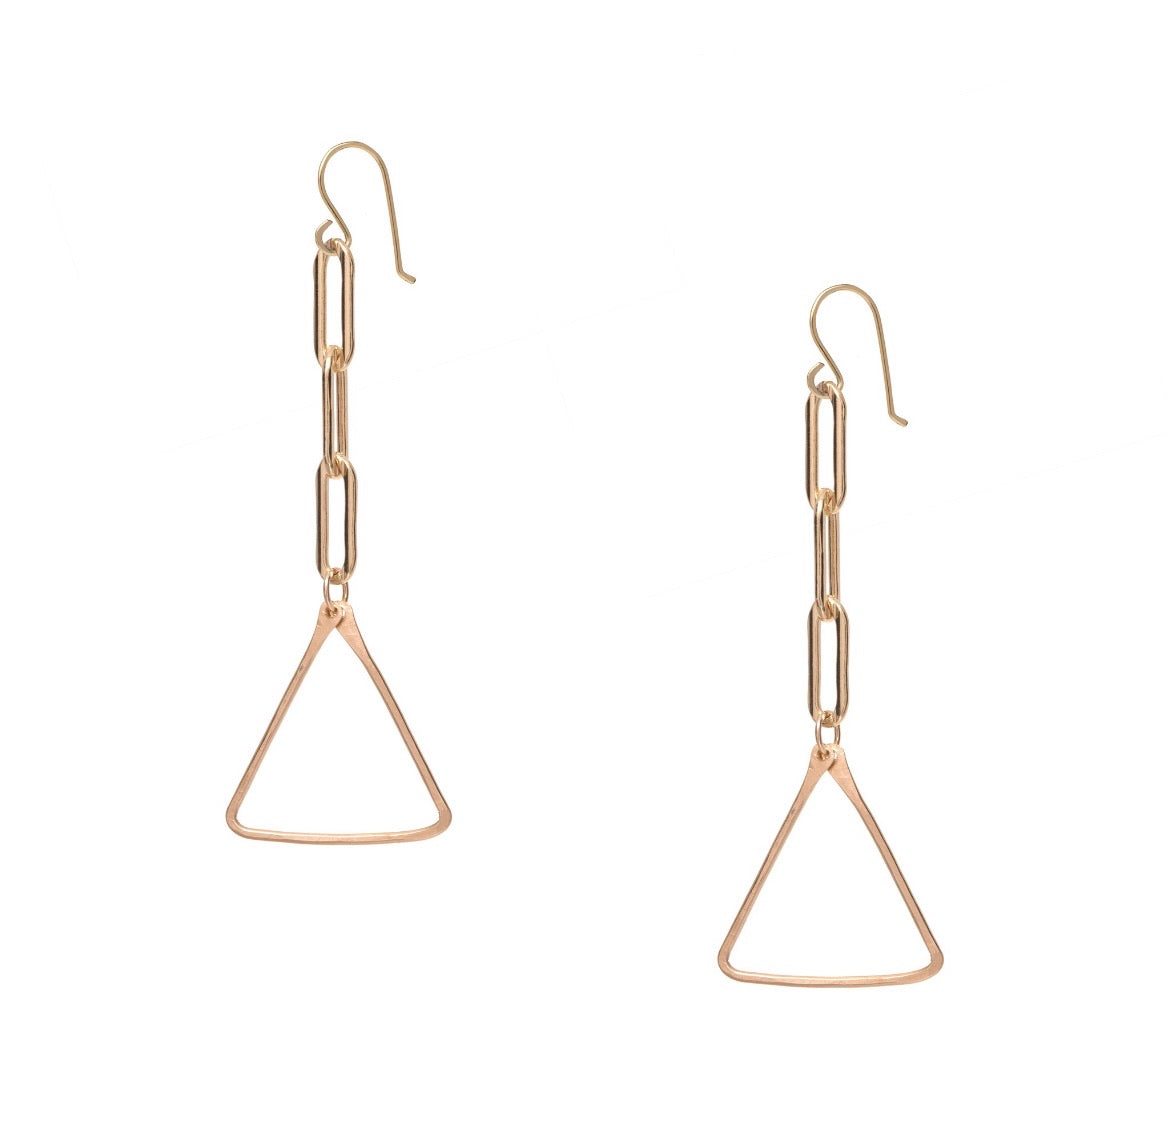 chain link earrings with a handmade triangle dangle 